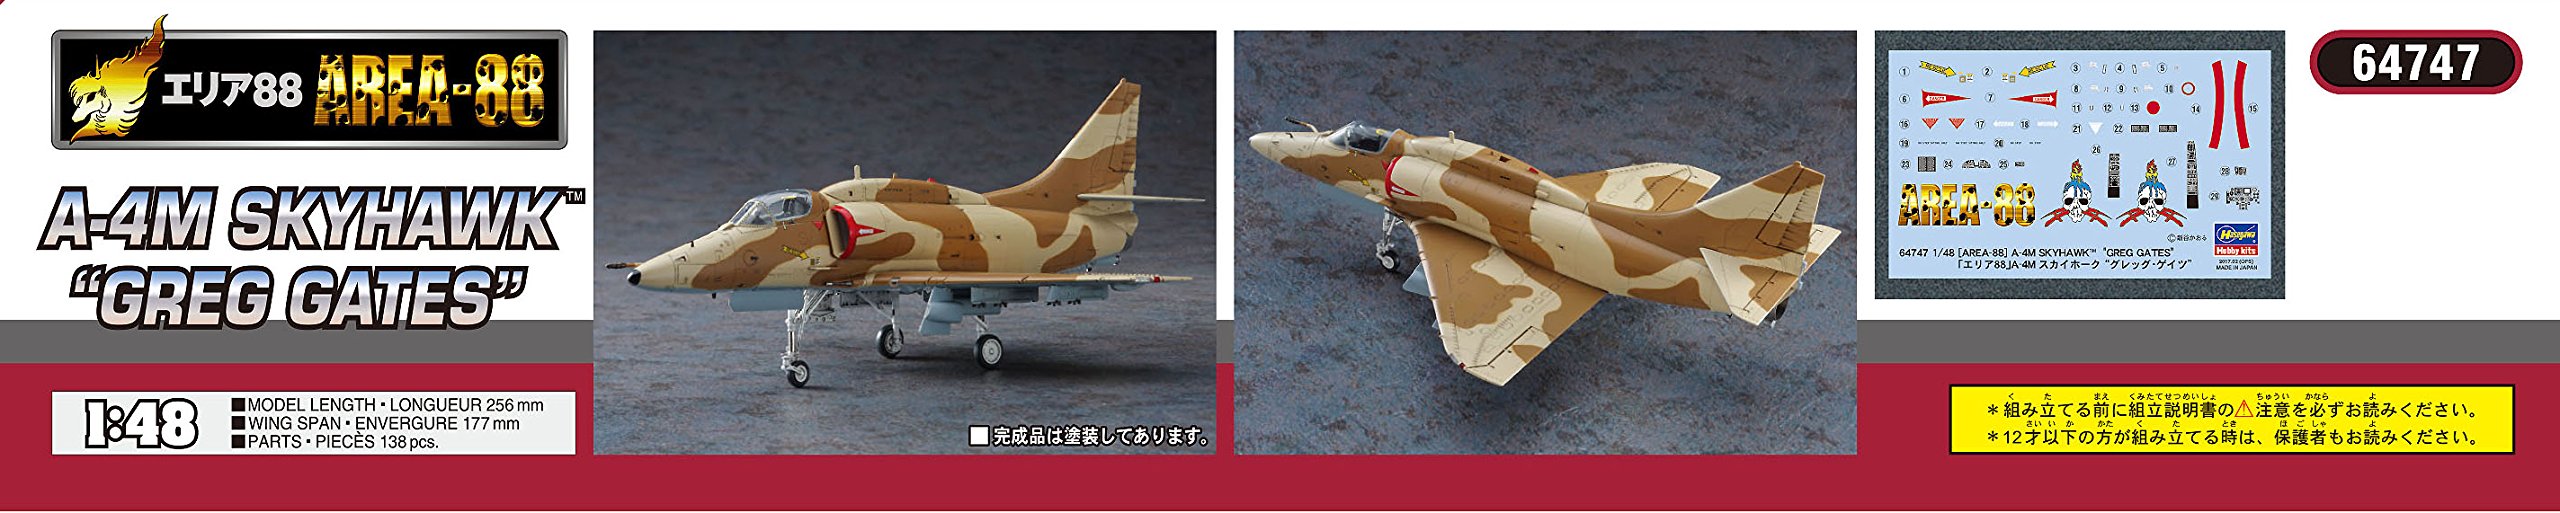 Hasegawa Japan Creator Works Series Area 88 A-4M Skyhawk Greg Gates 1/48 Scale Plastic Model 64747